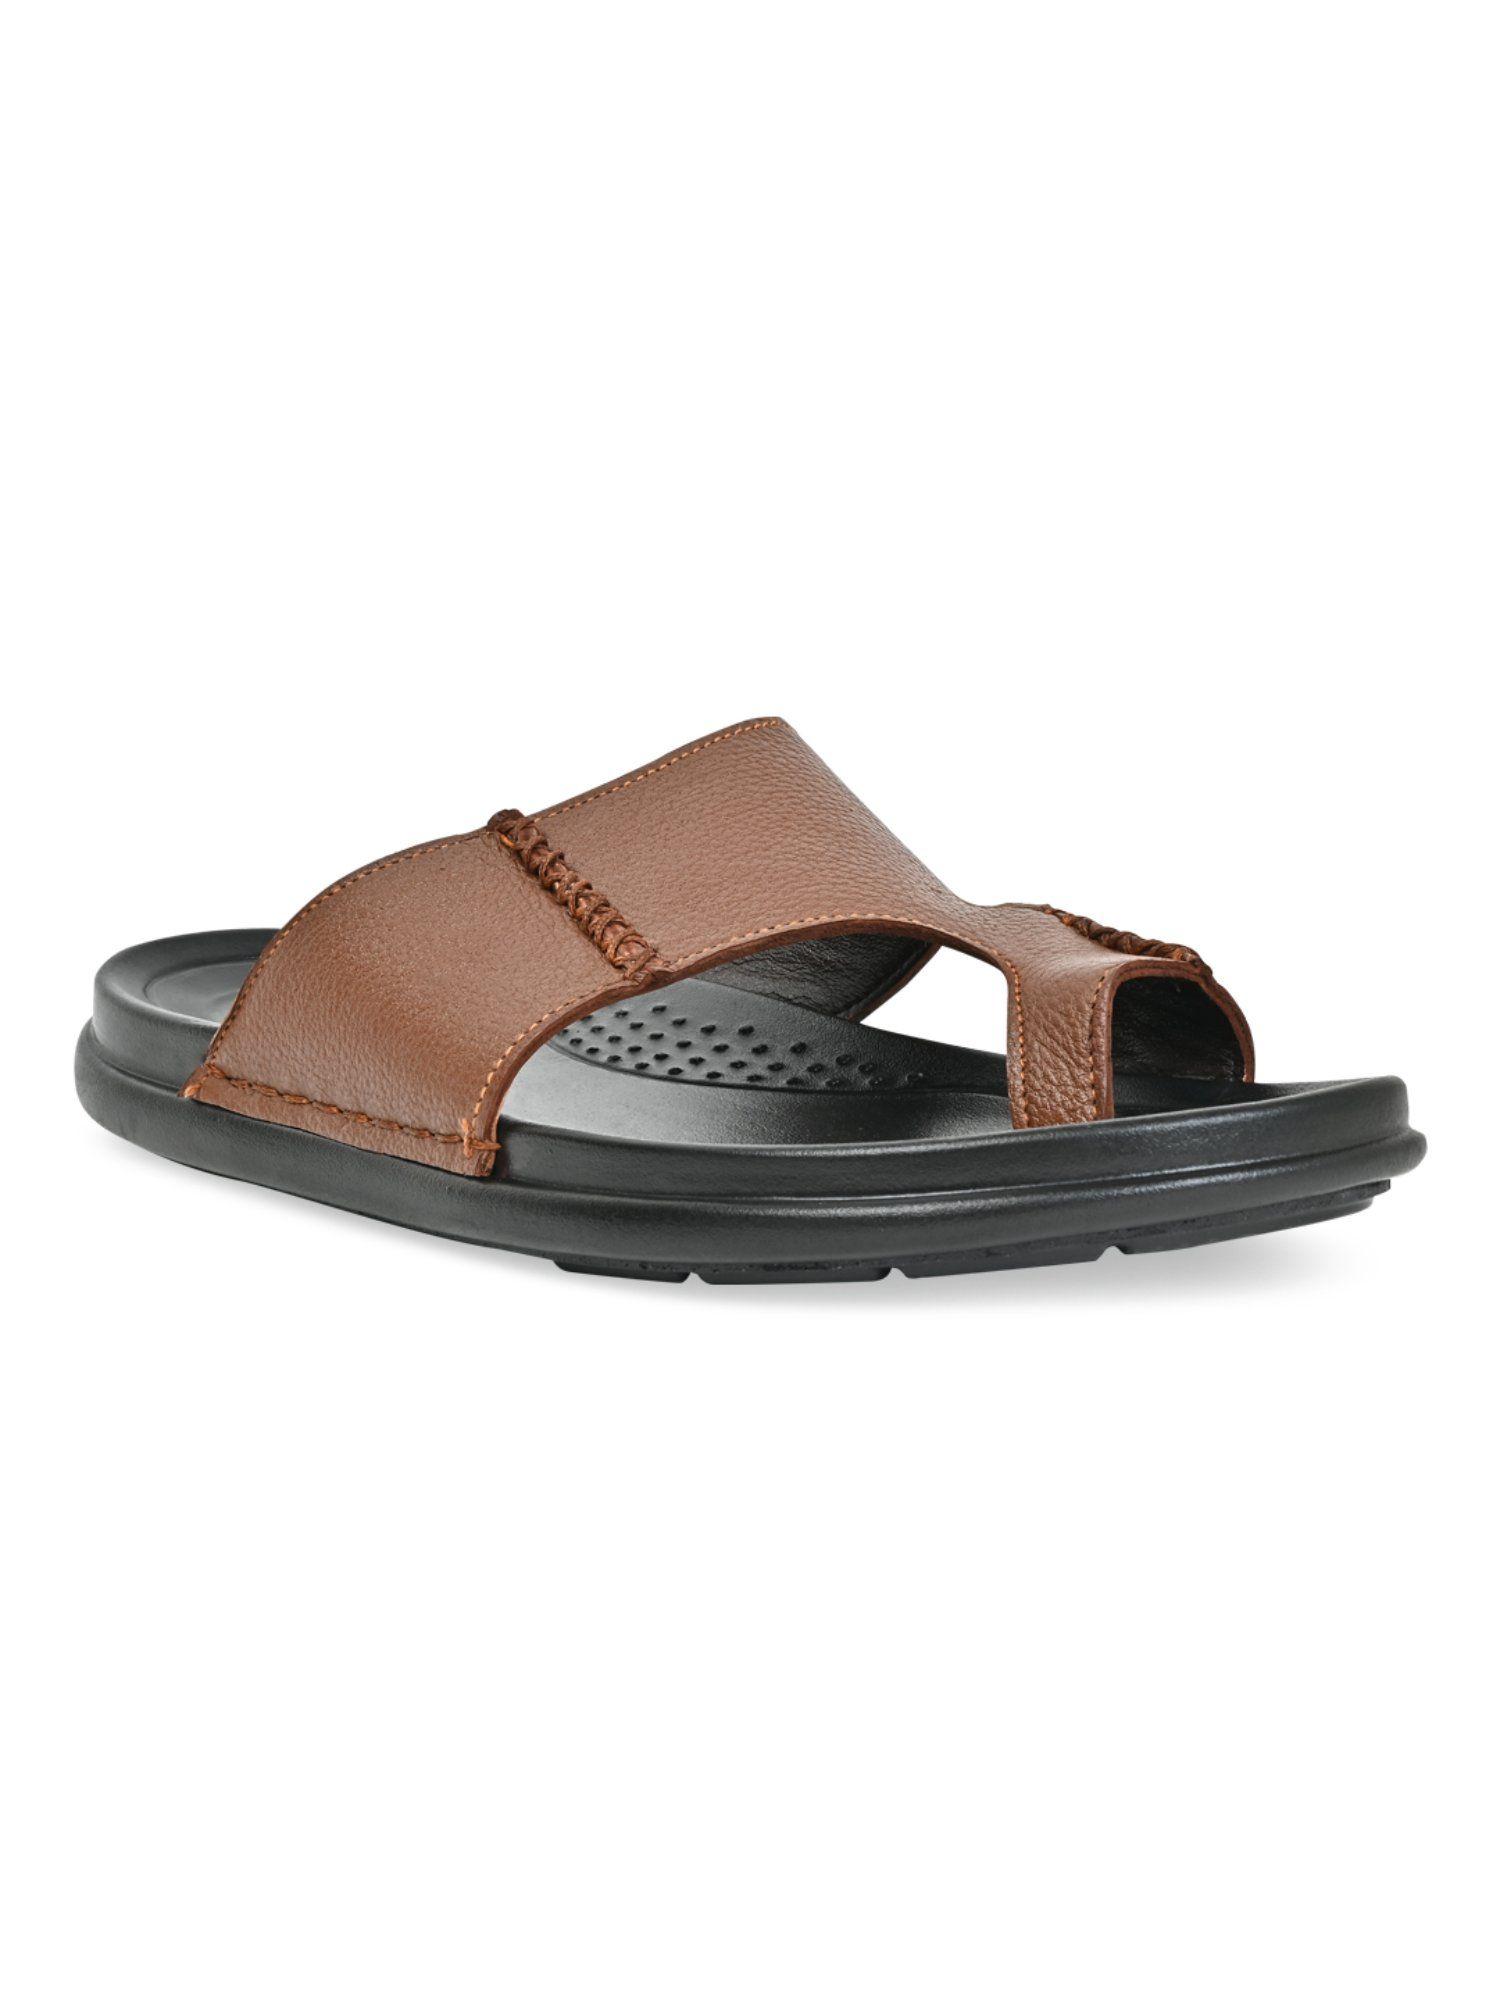 Tan Men Casual Leather Sandals